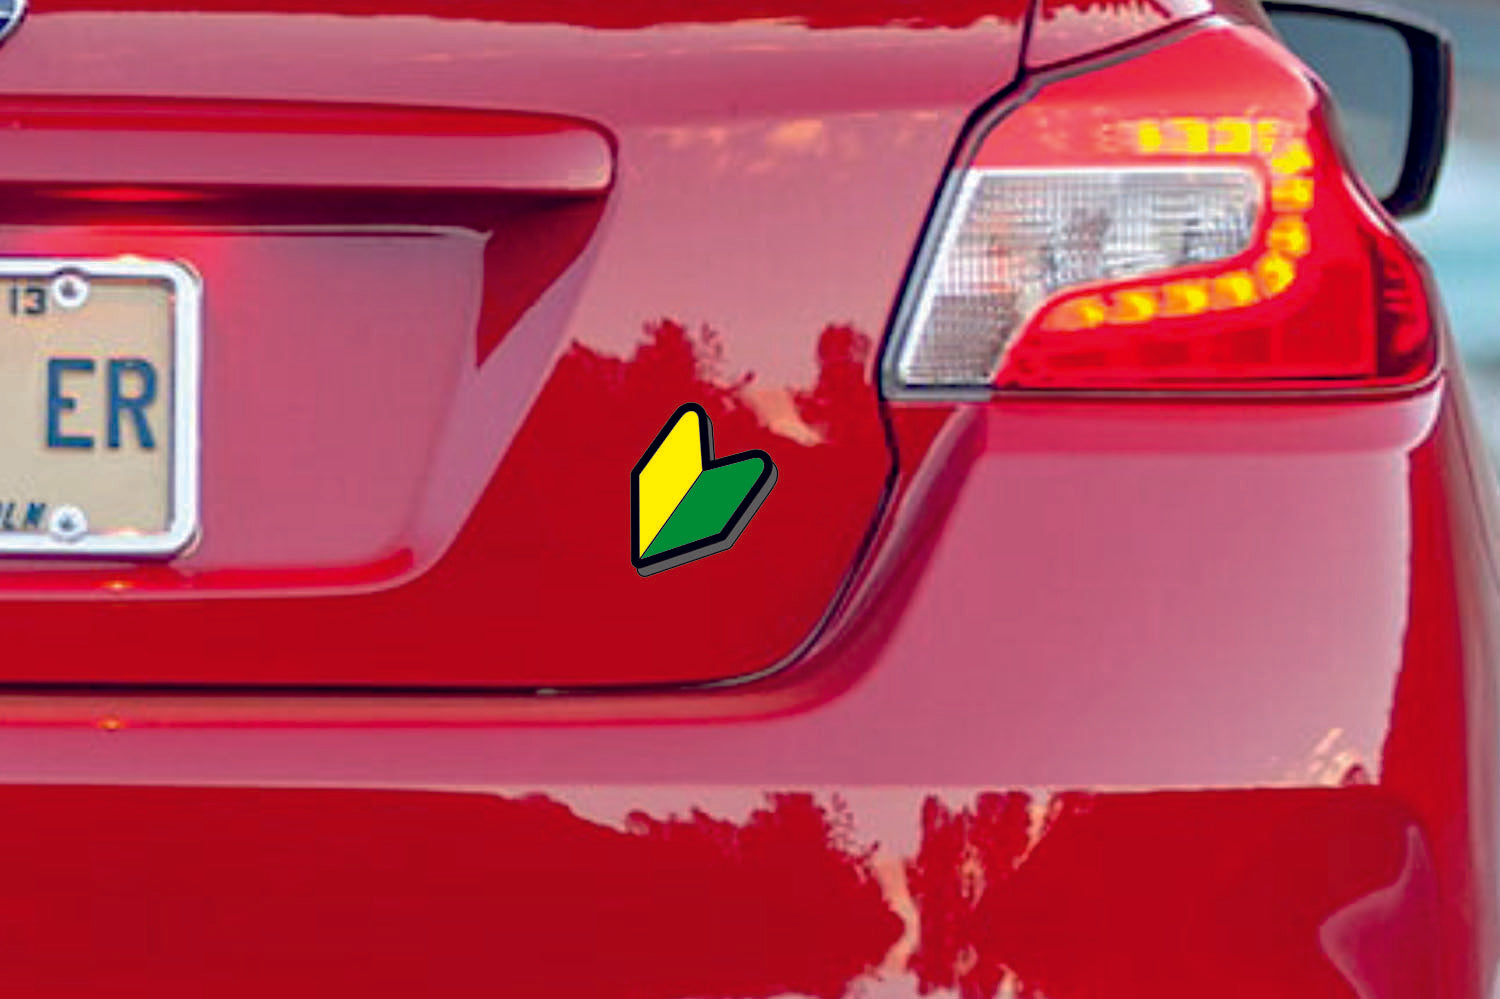 Nissan tailgate trunk rear emblem with JDM logo